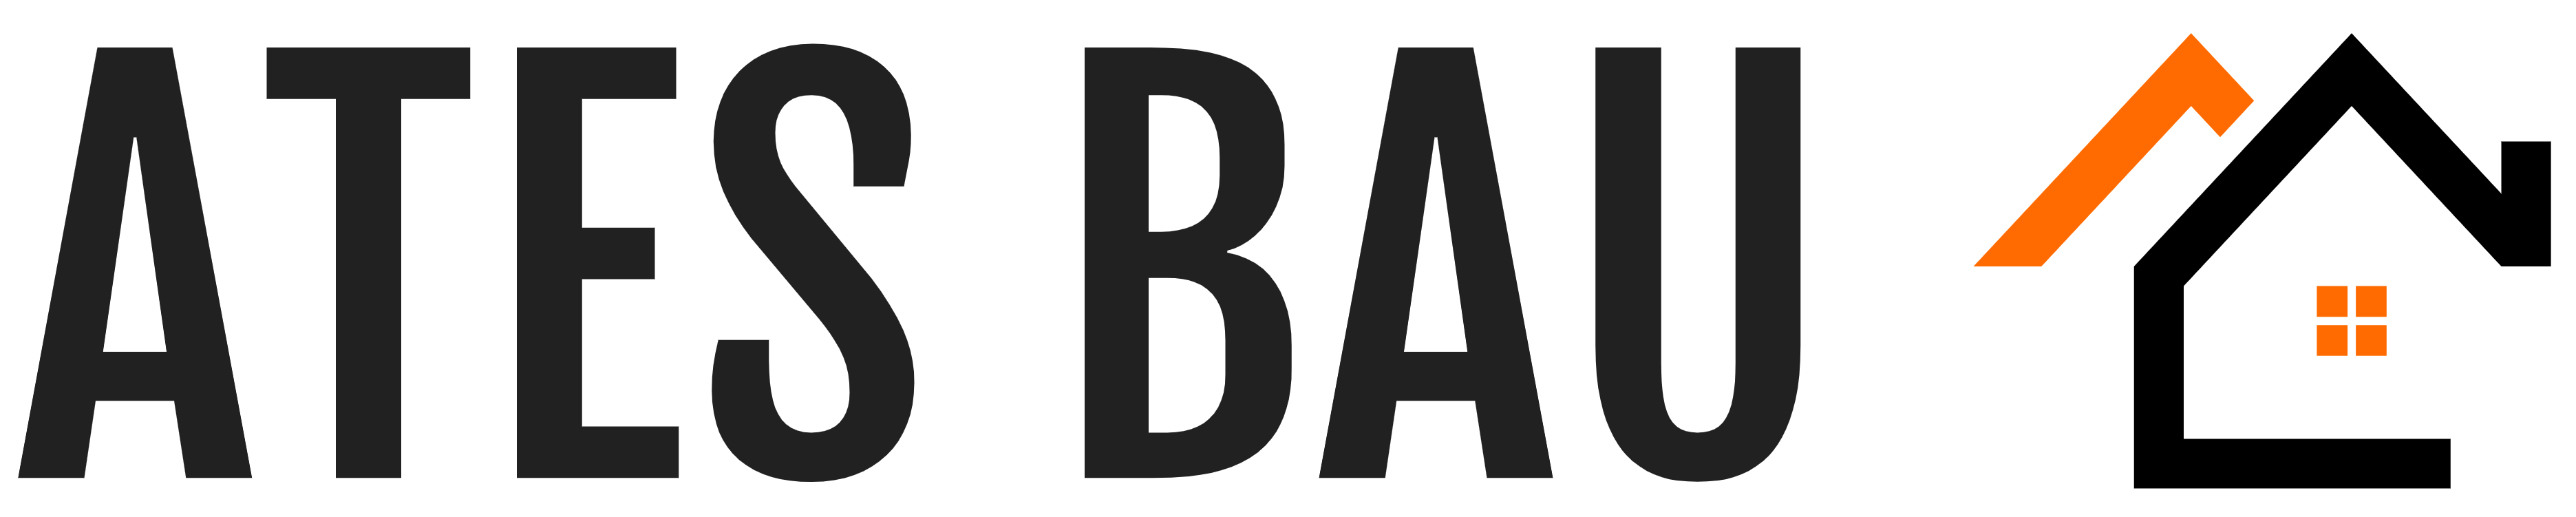 Ates Bau Logo